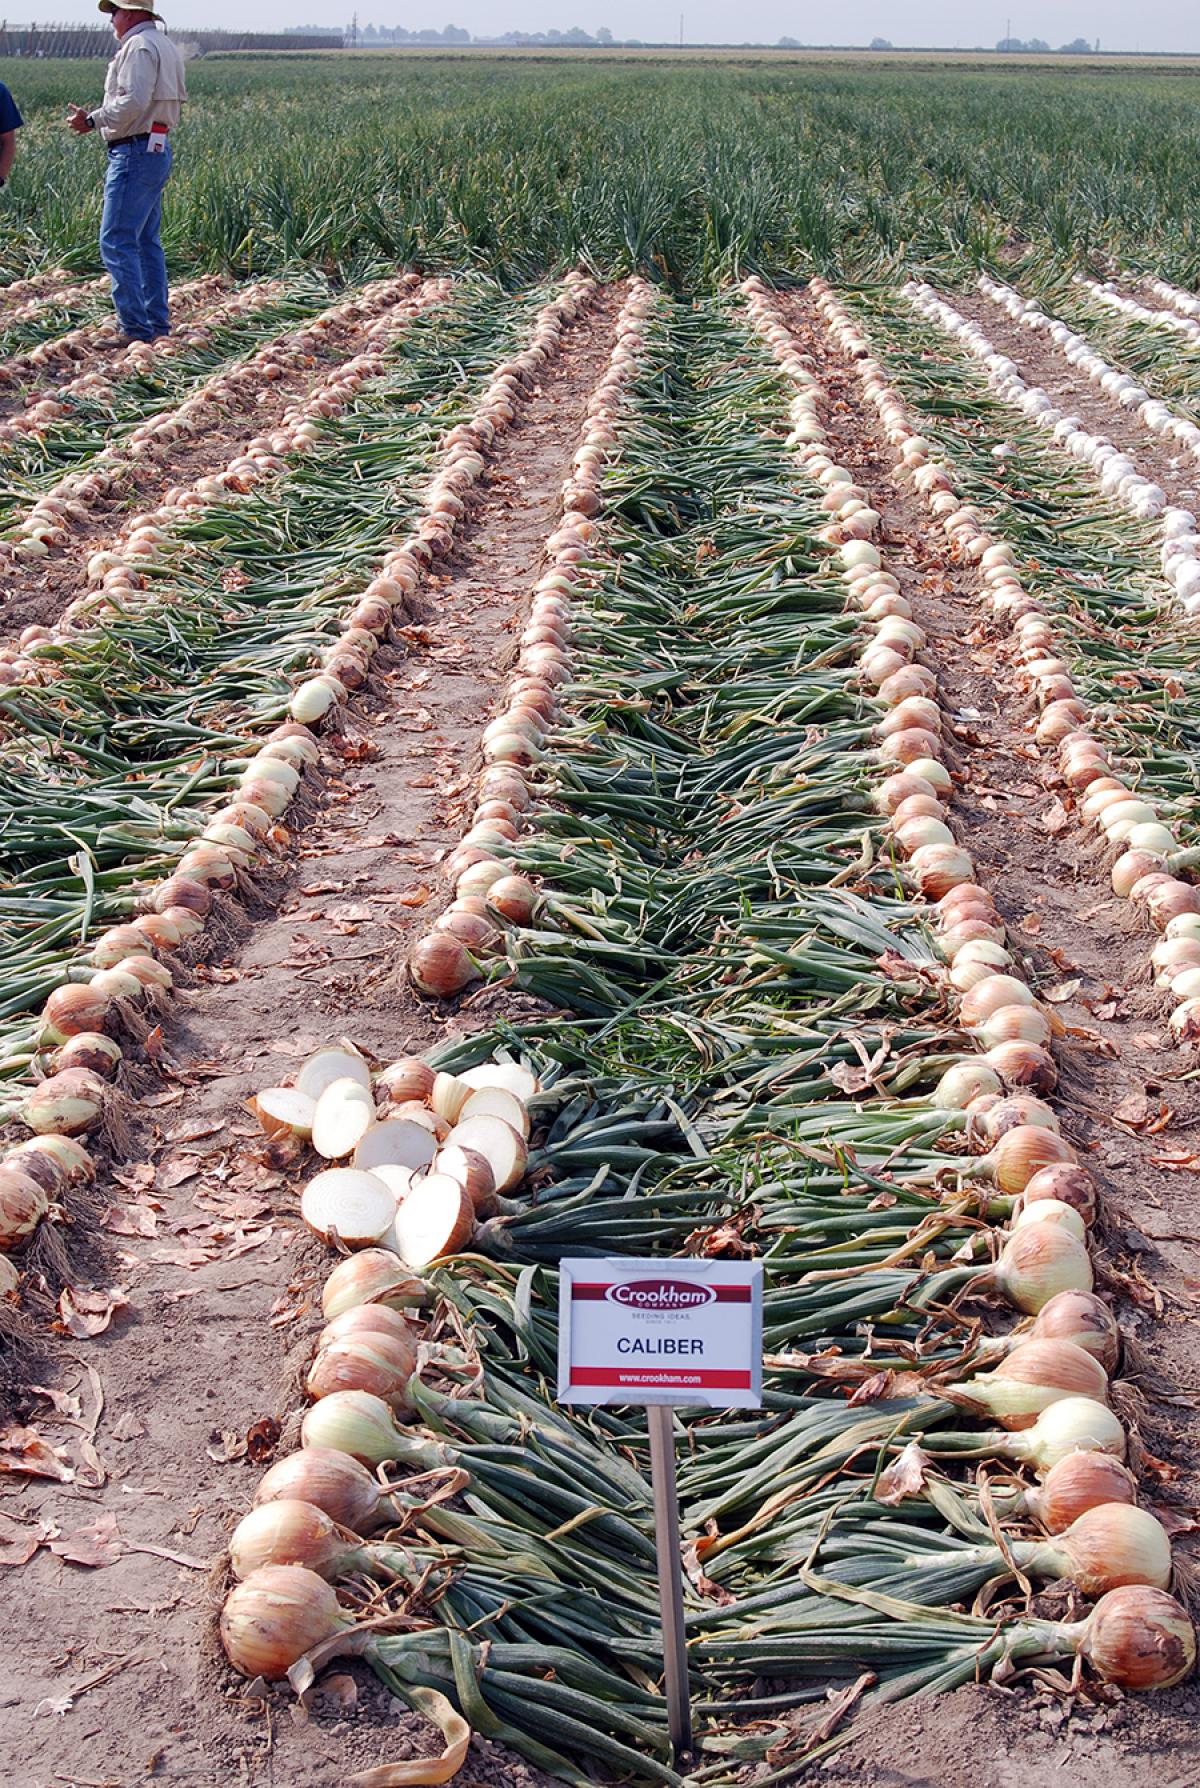 Caliber Long Day Onion Crookham Company Seed